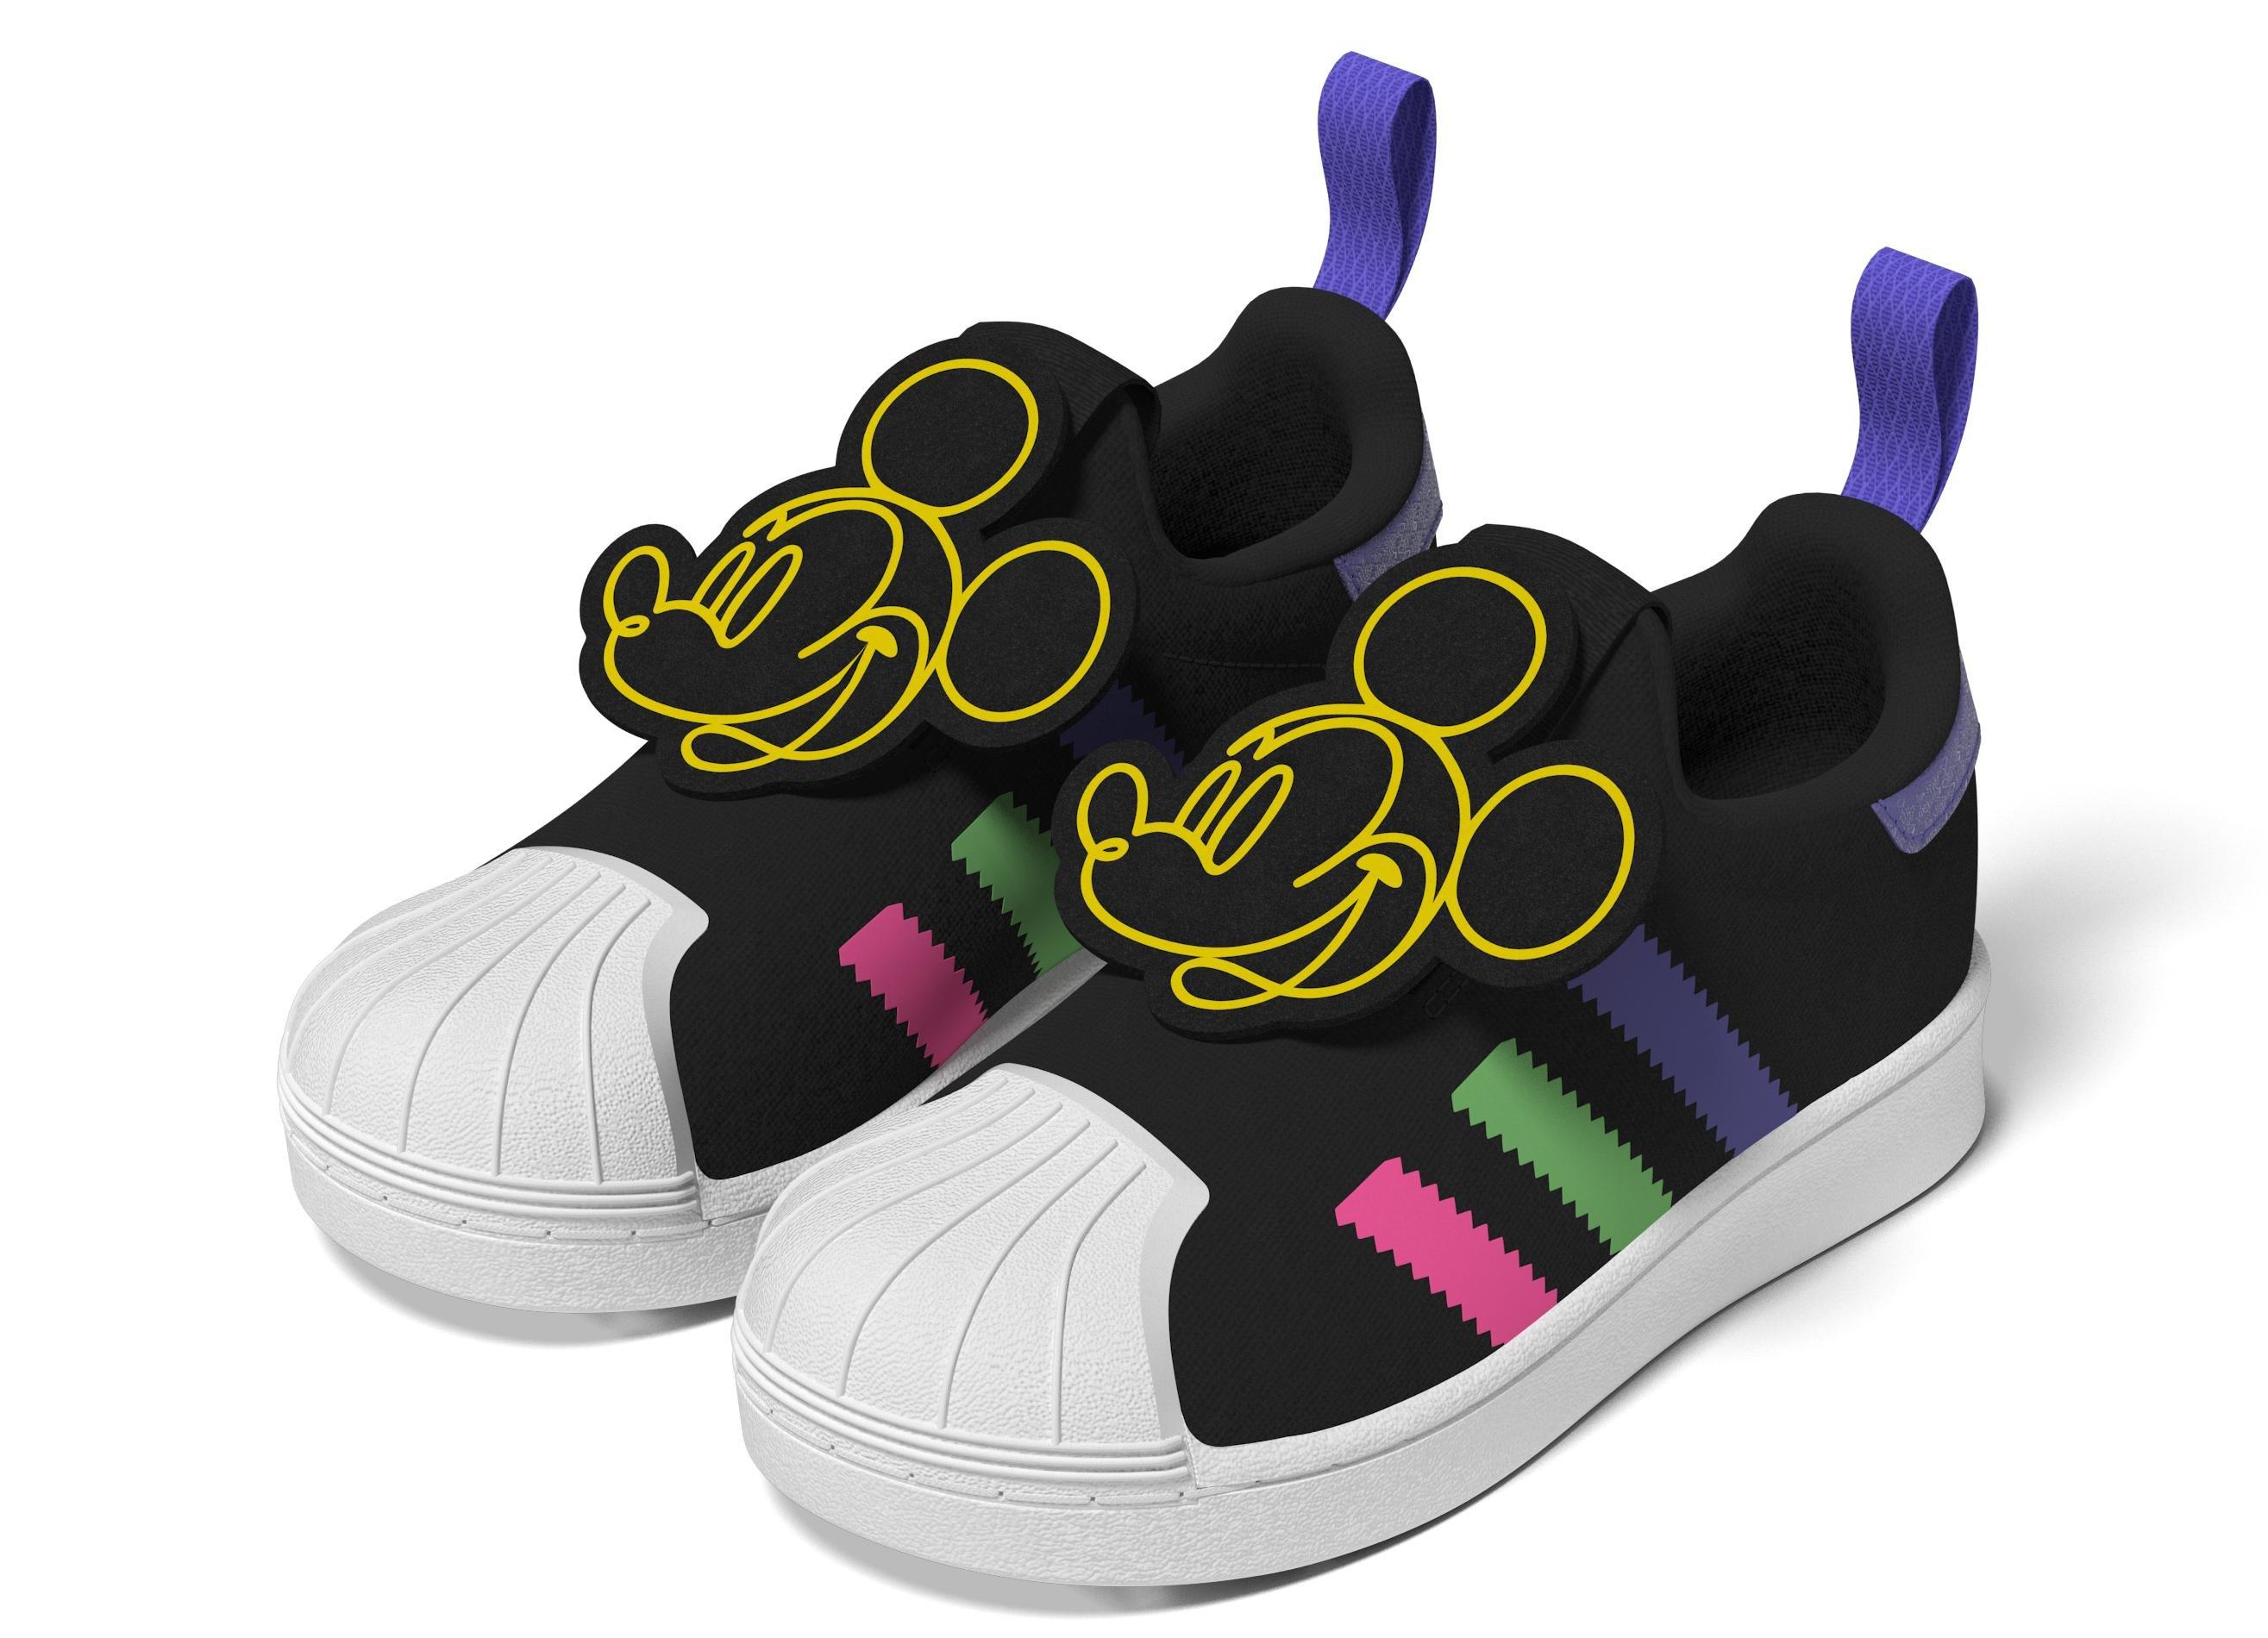 adidas - Unisex Kids Adidas Originals X Disney Mickey Superstar 360 Shoes, Black